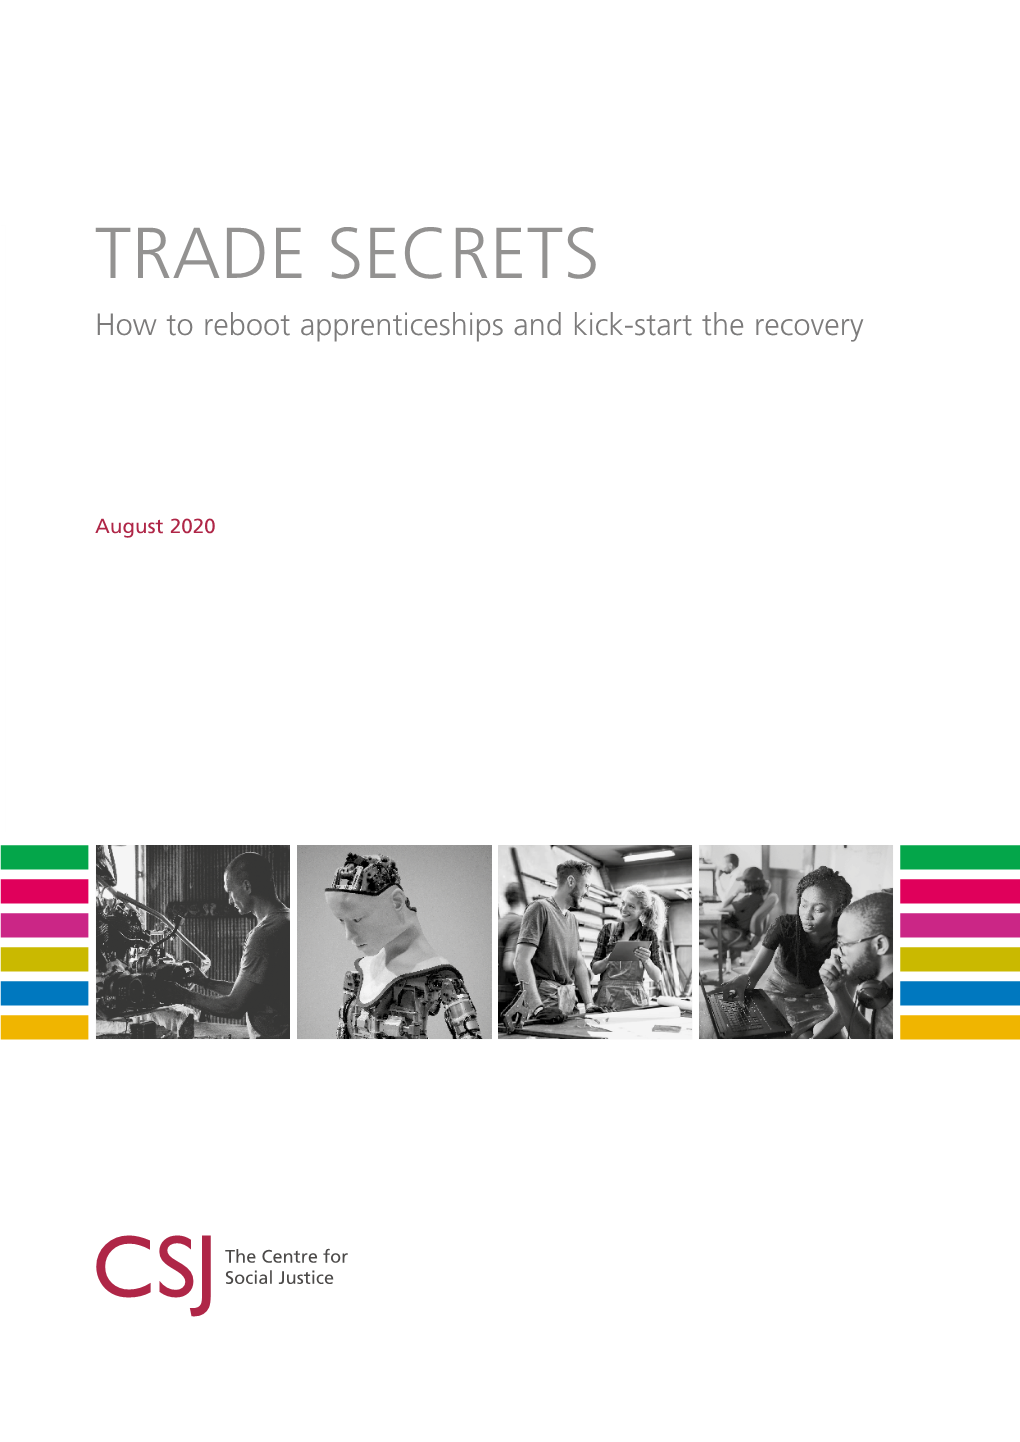 Trade Secrets: How to Reboot Apprenticeships and Kick-Start the Recovery TRADE SECRETS How to Reboot Apprenticeships and Kick-Start the Recovery